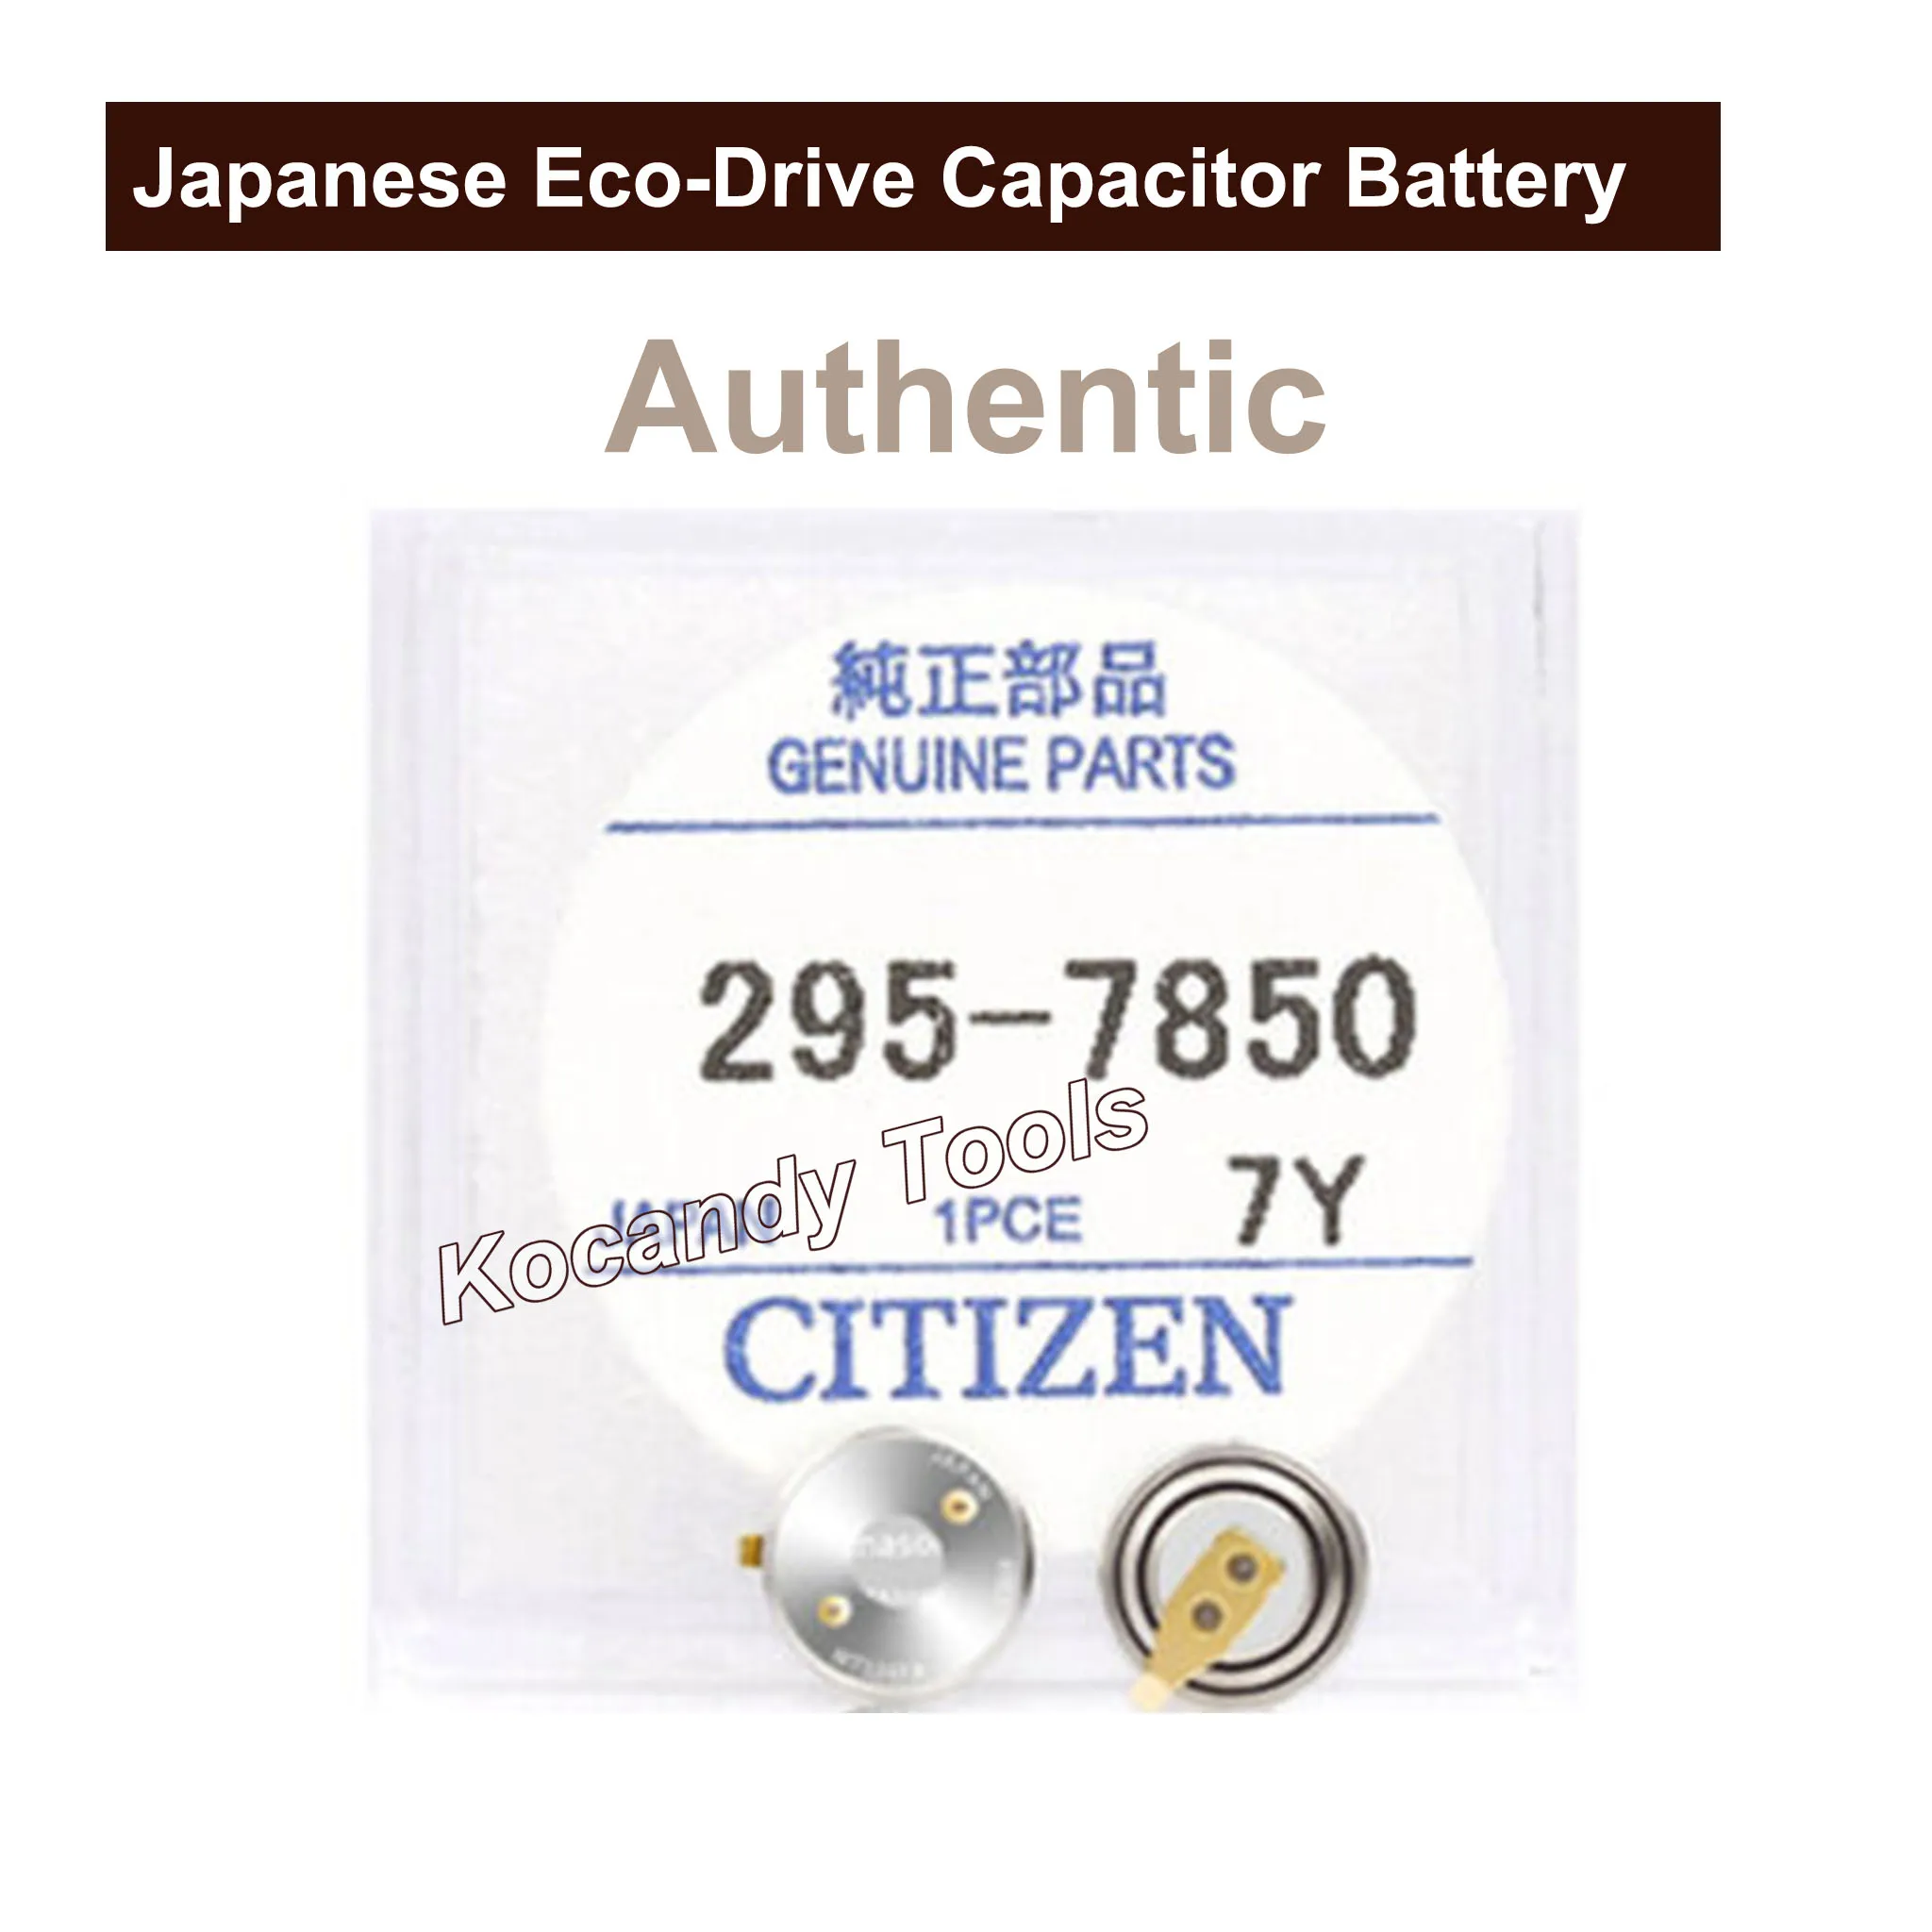 

Panasonc Capacitor Battery 295.7850 for Citzen Eco-Drive G820M Watch Part No. 295-7850 Watch Battery Accumulator MT616